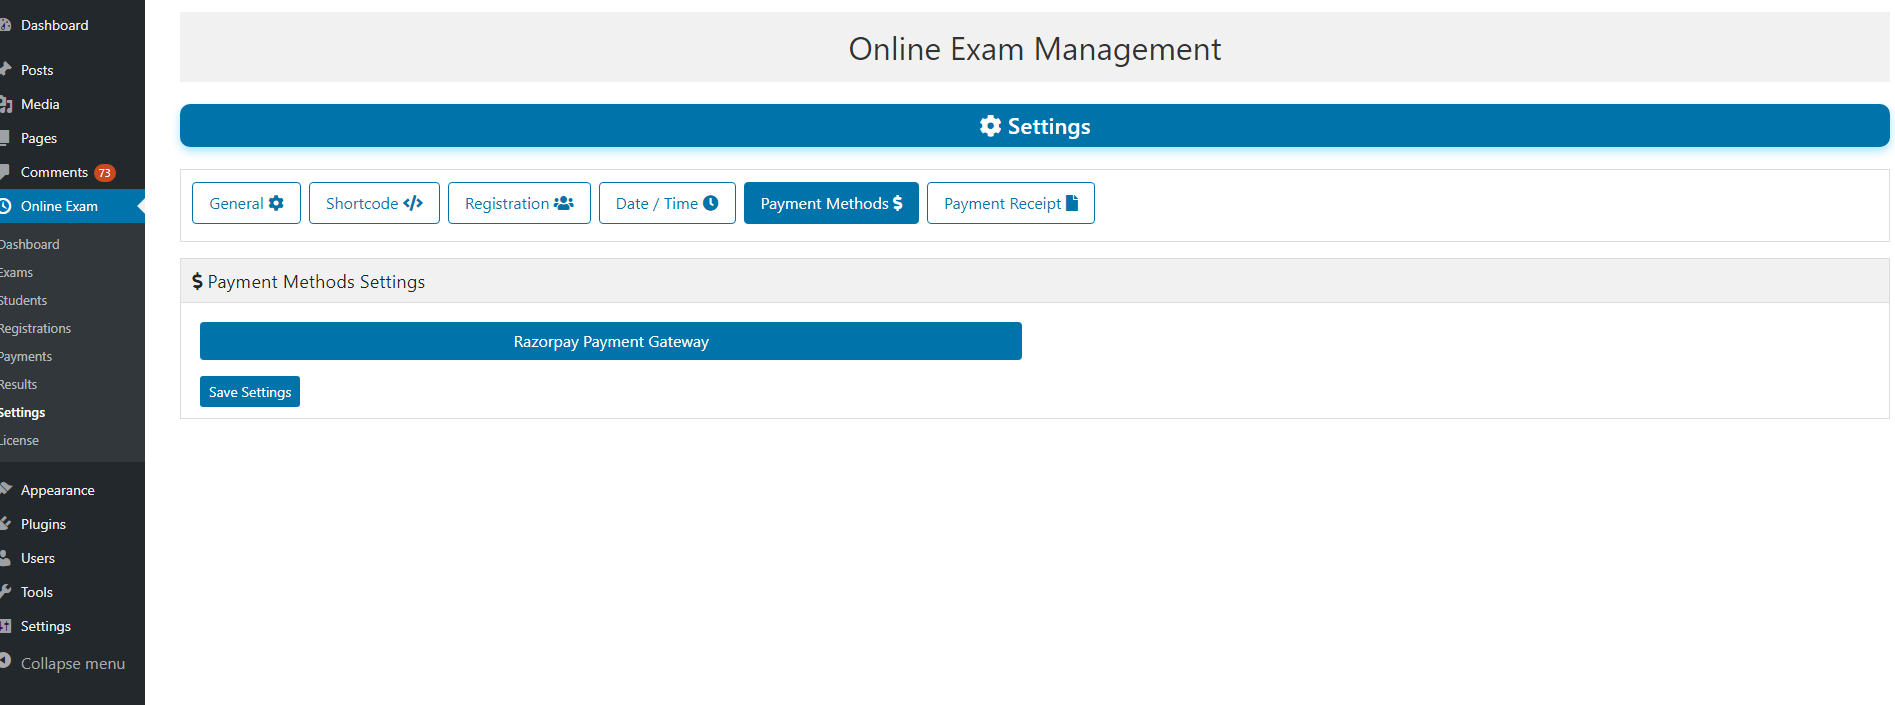 Online Exam Management - Education & Results Management by weblizar